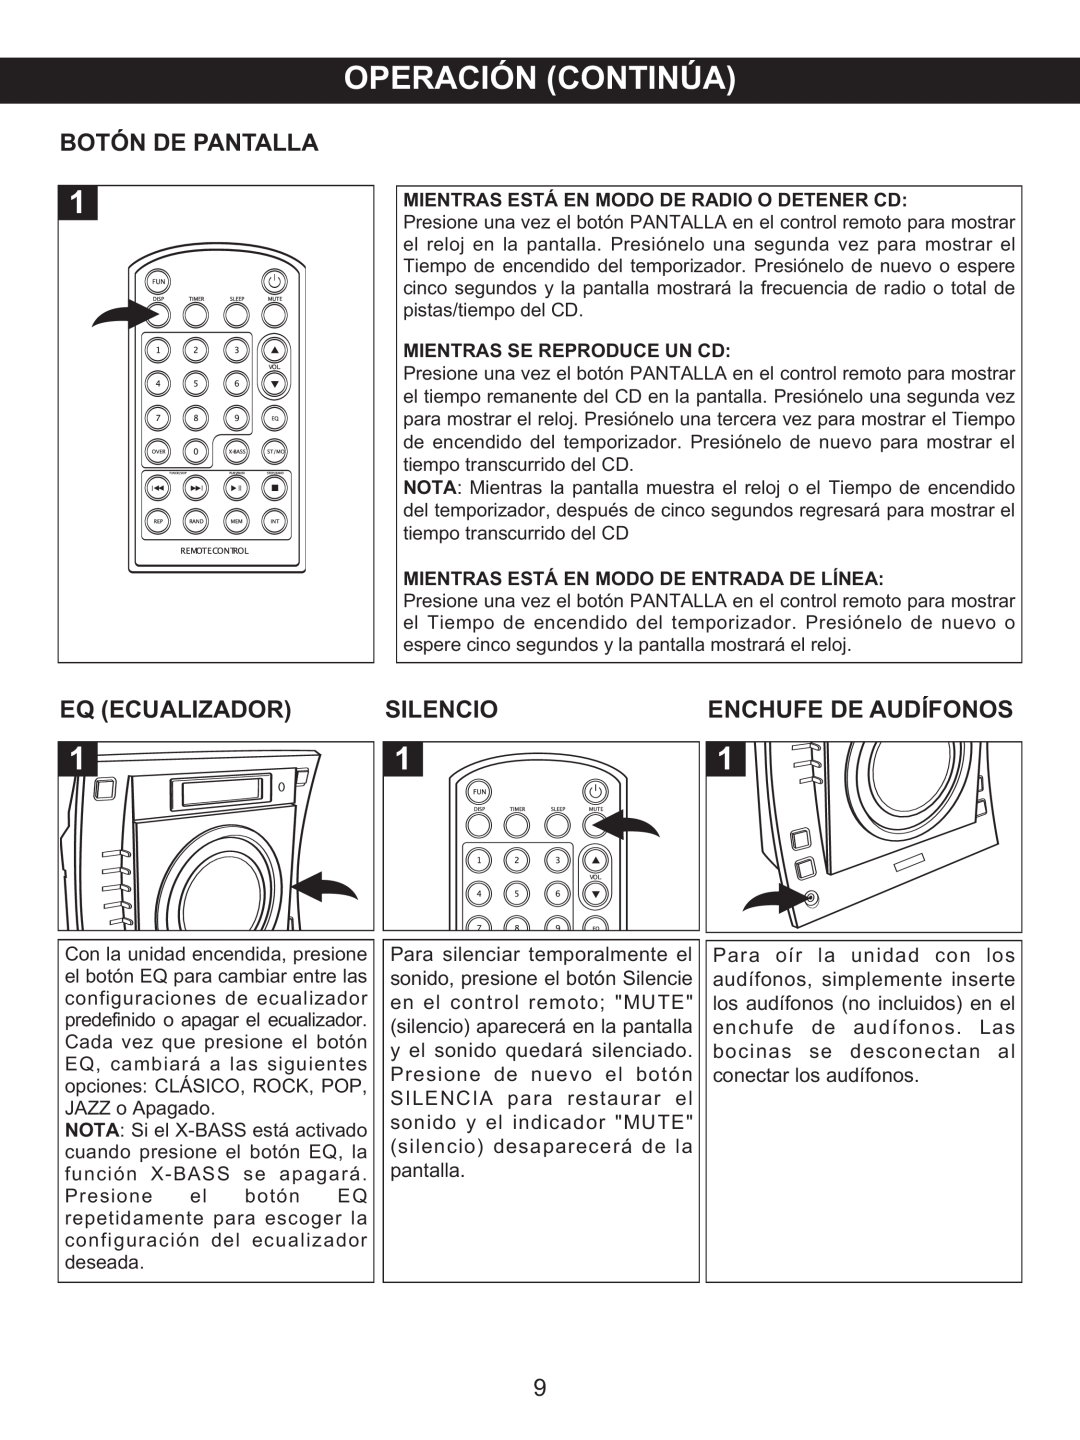 Memorex MX4137 manual Botón De Pantalla, Eq Ecualizador, Silencio, Mientras Está En Modo De Radio O Detener Cd 